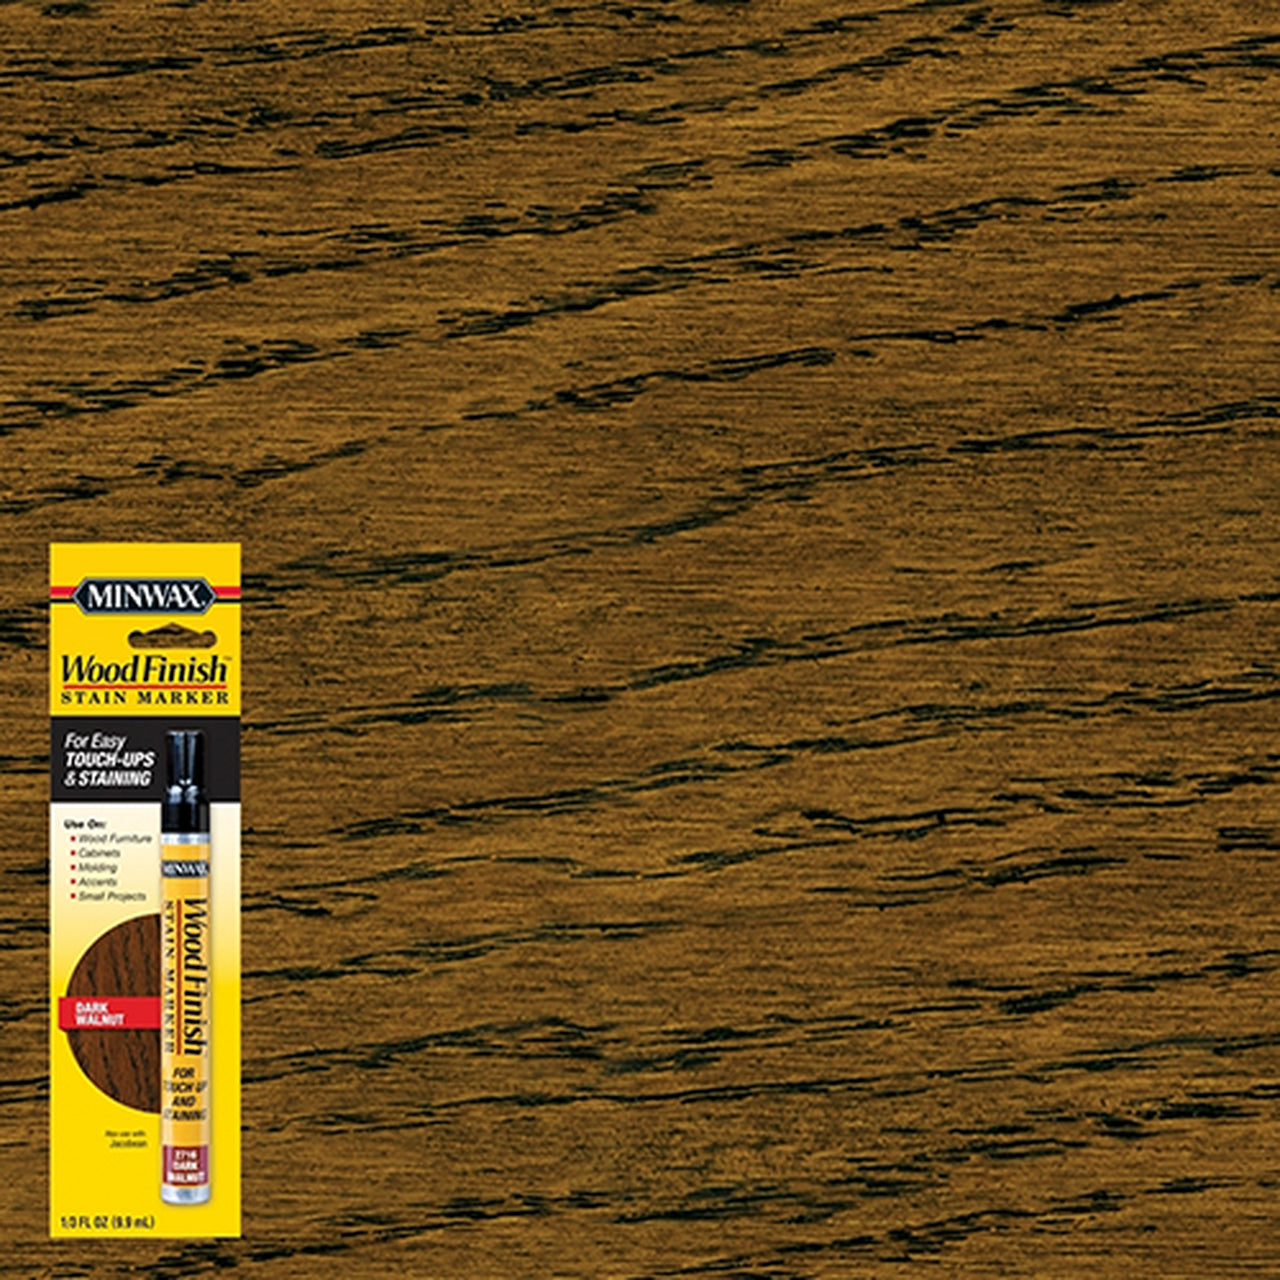 Minwax Wood Finish Stain Marker – Dark Walnut